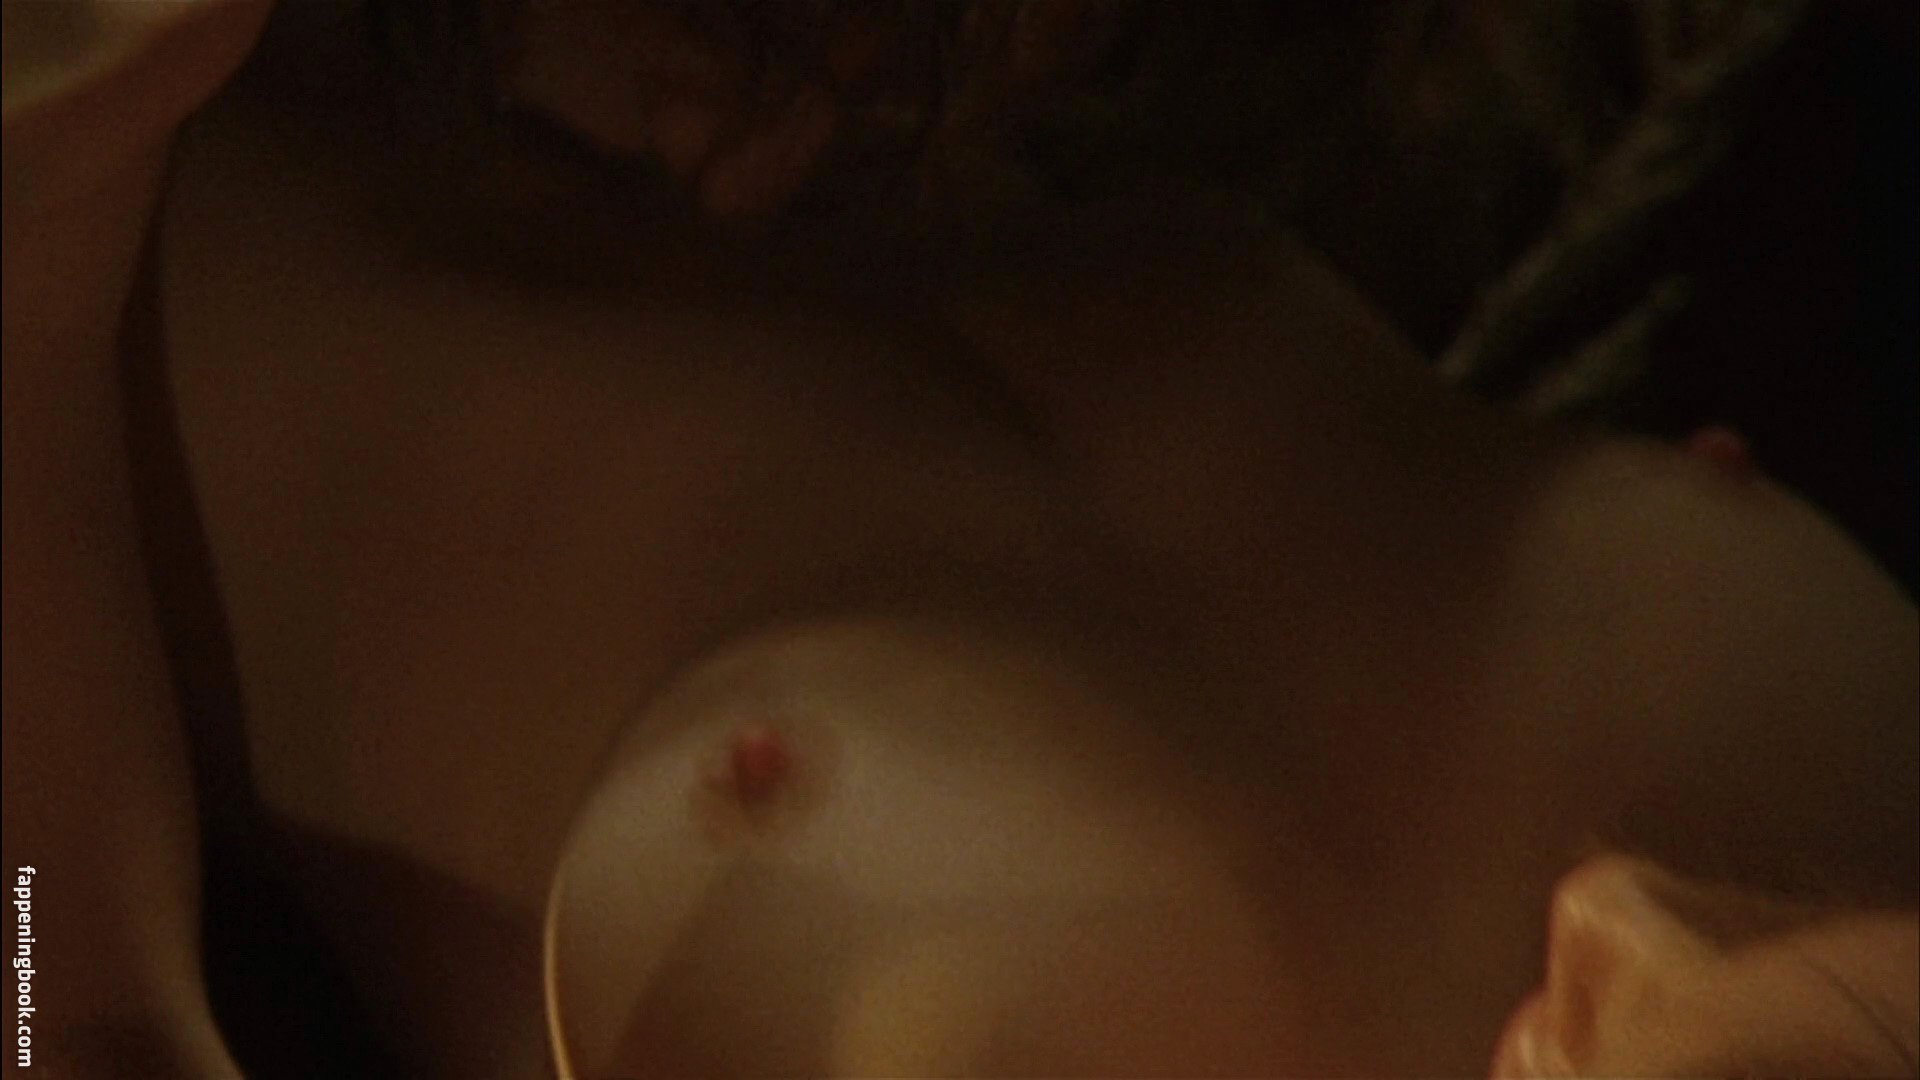 Toni Collette Nude